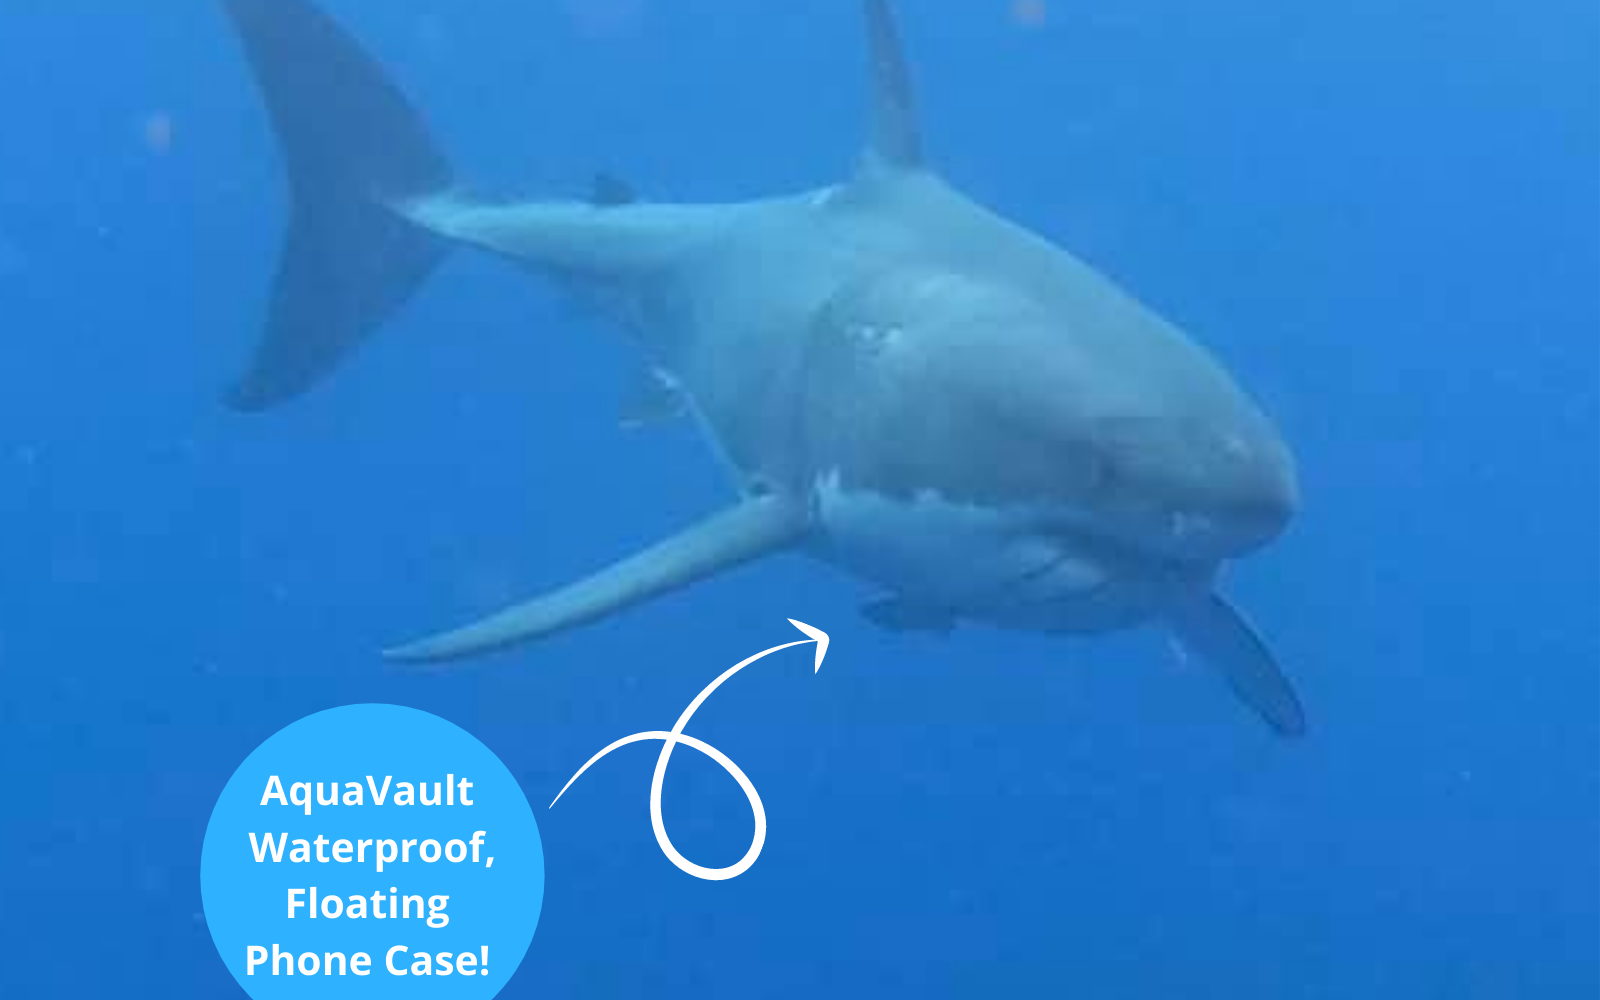 AquaVault Phone Case Survives Shark Attack!